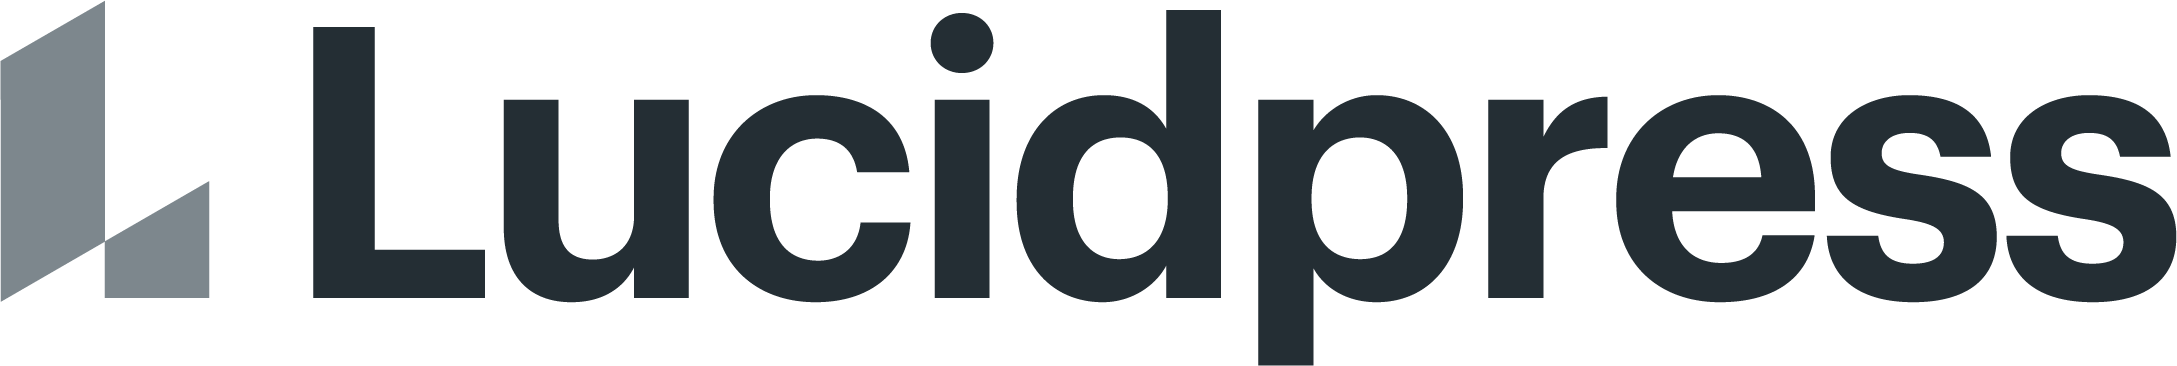 Logo-Lucidpress-grey